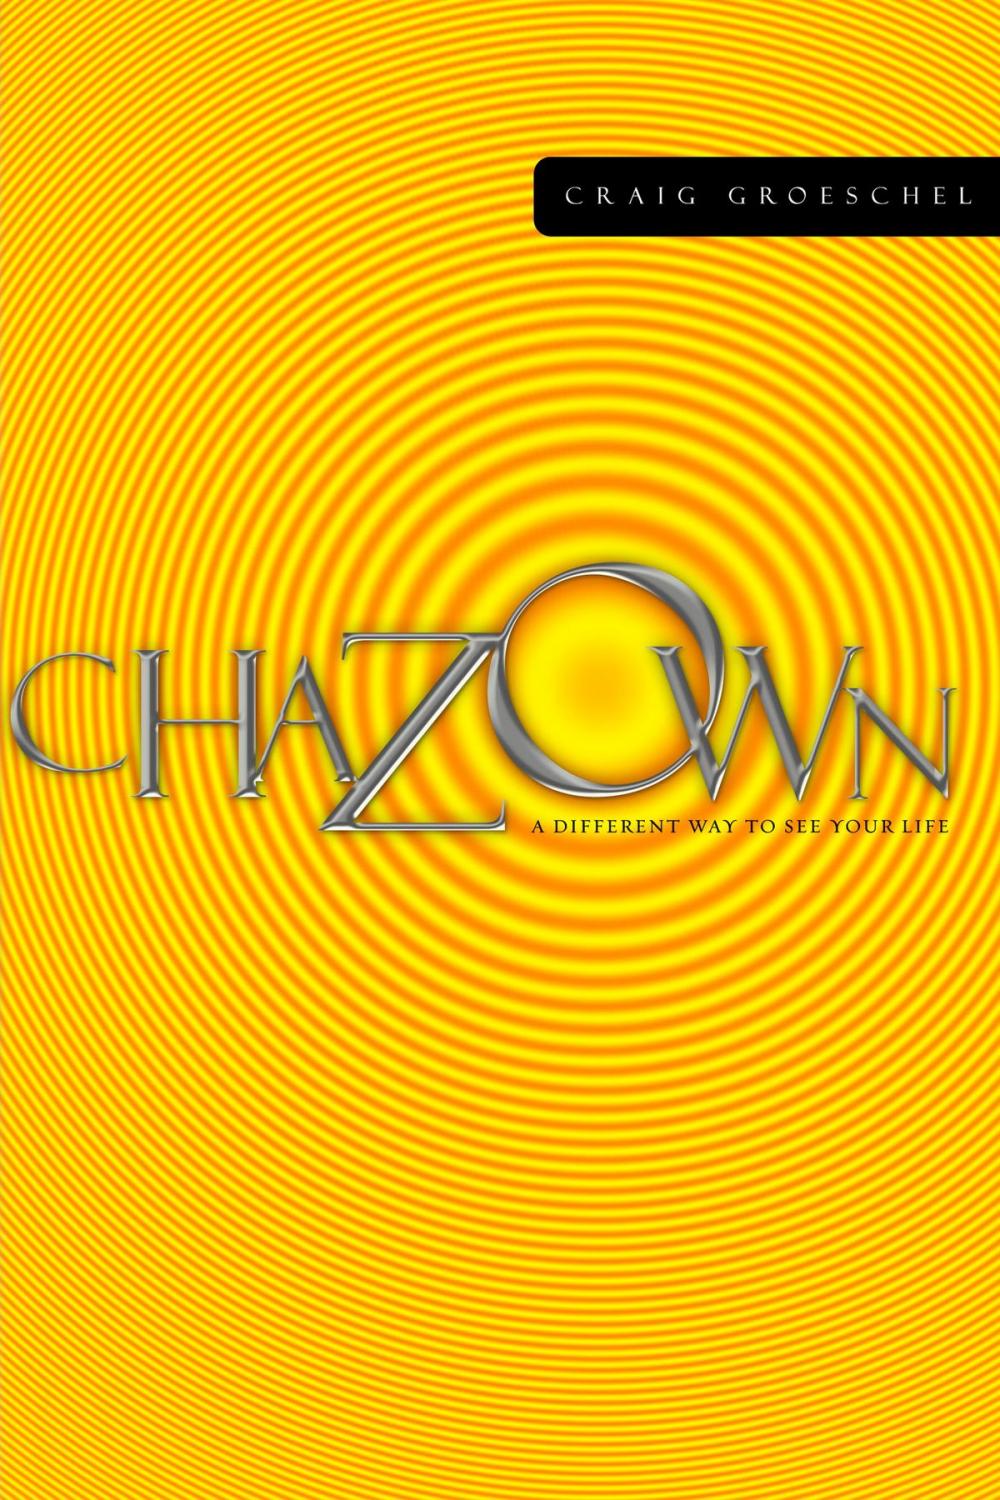 Big bigCover of Chazown